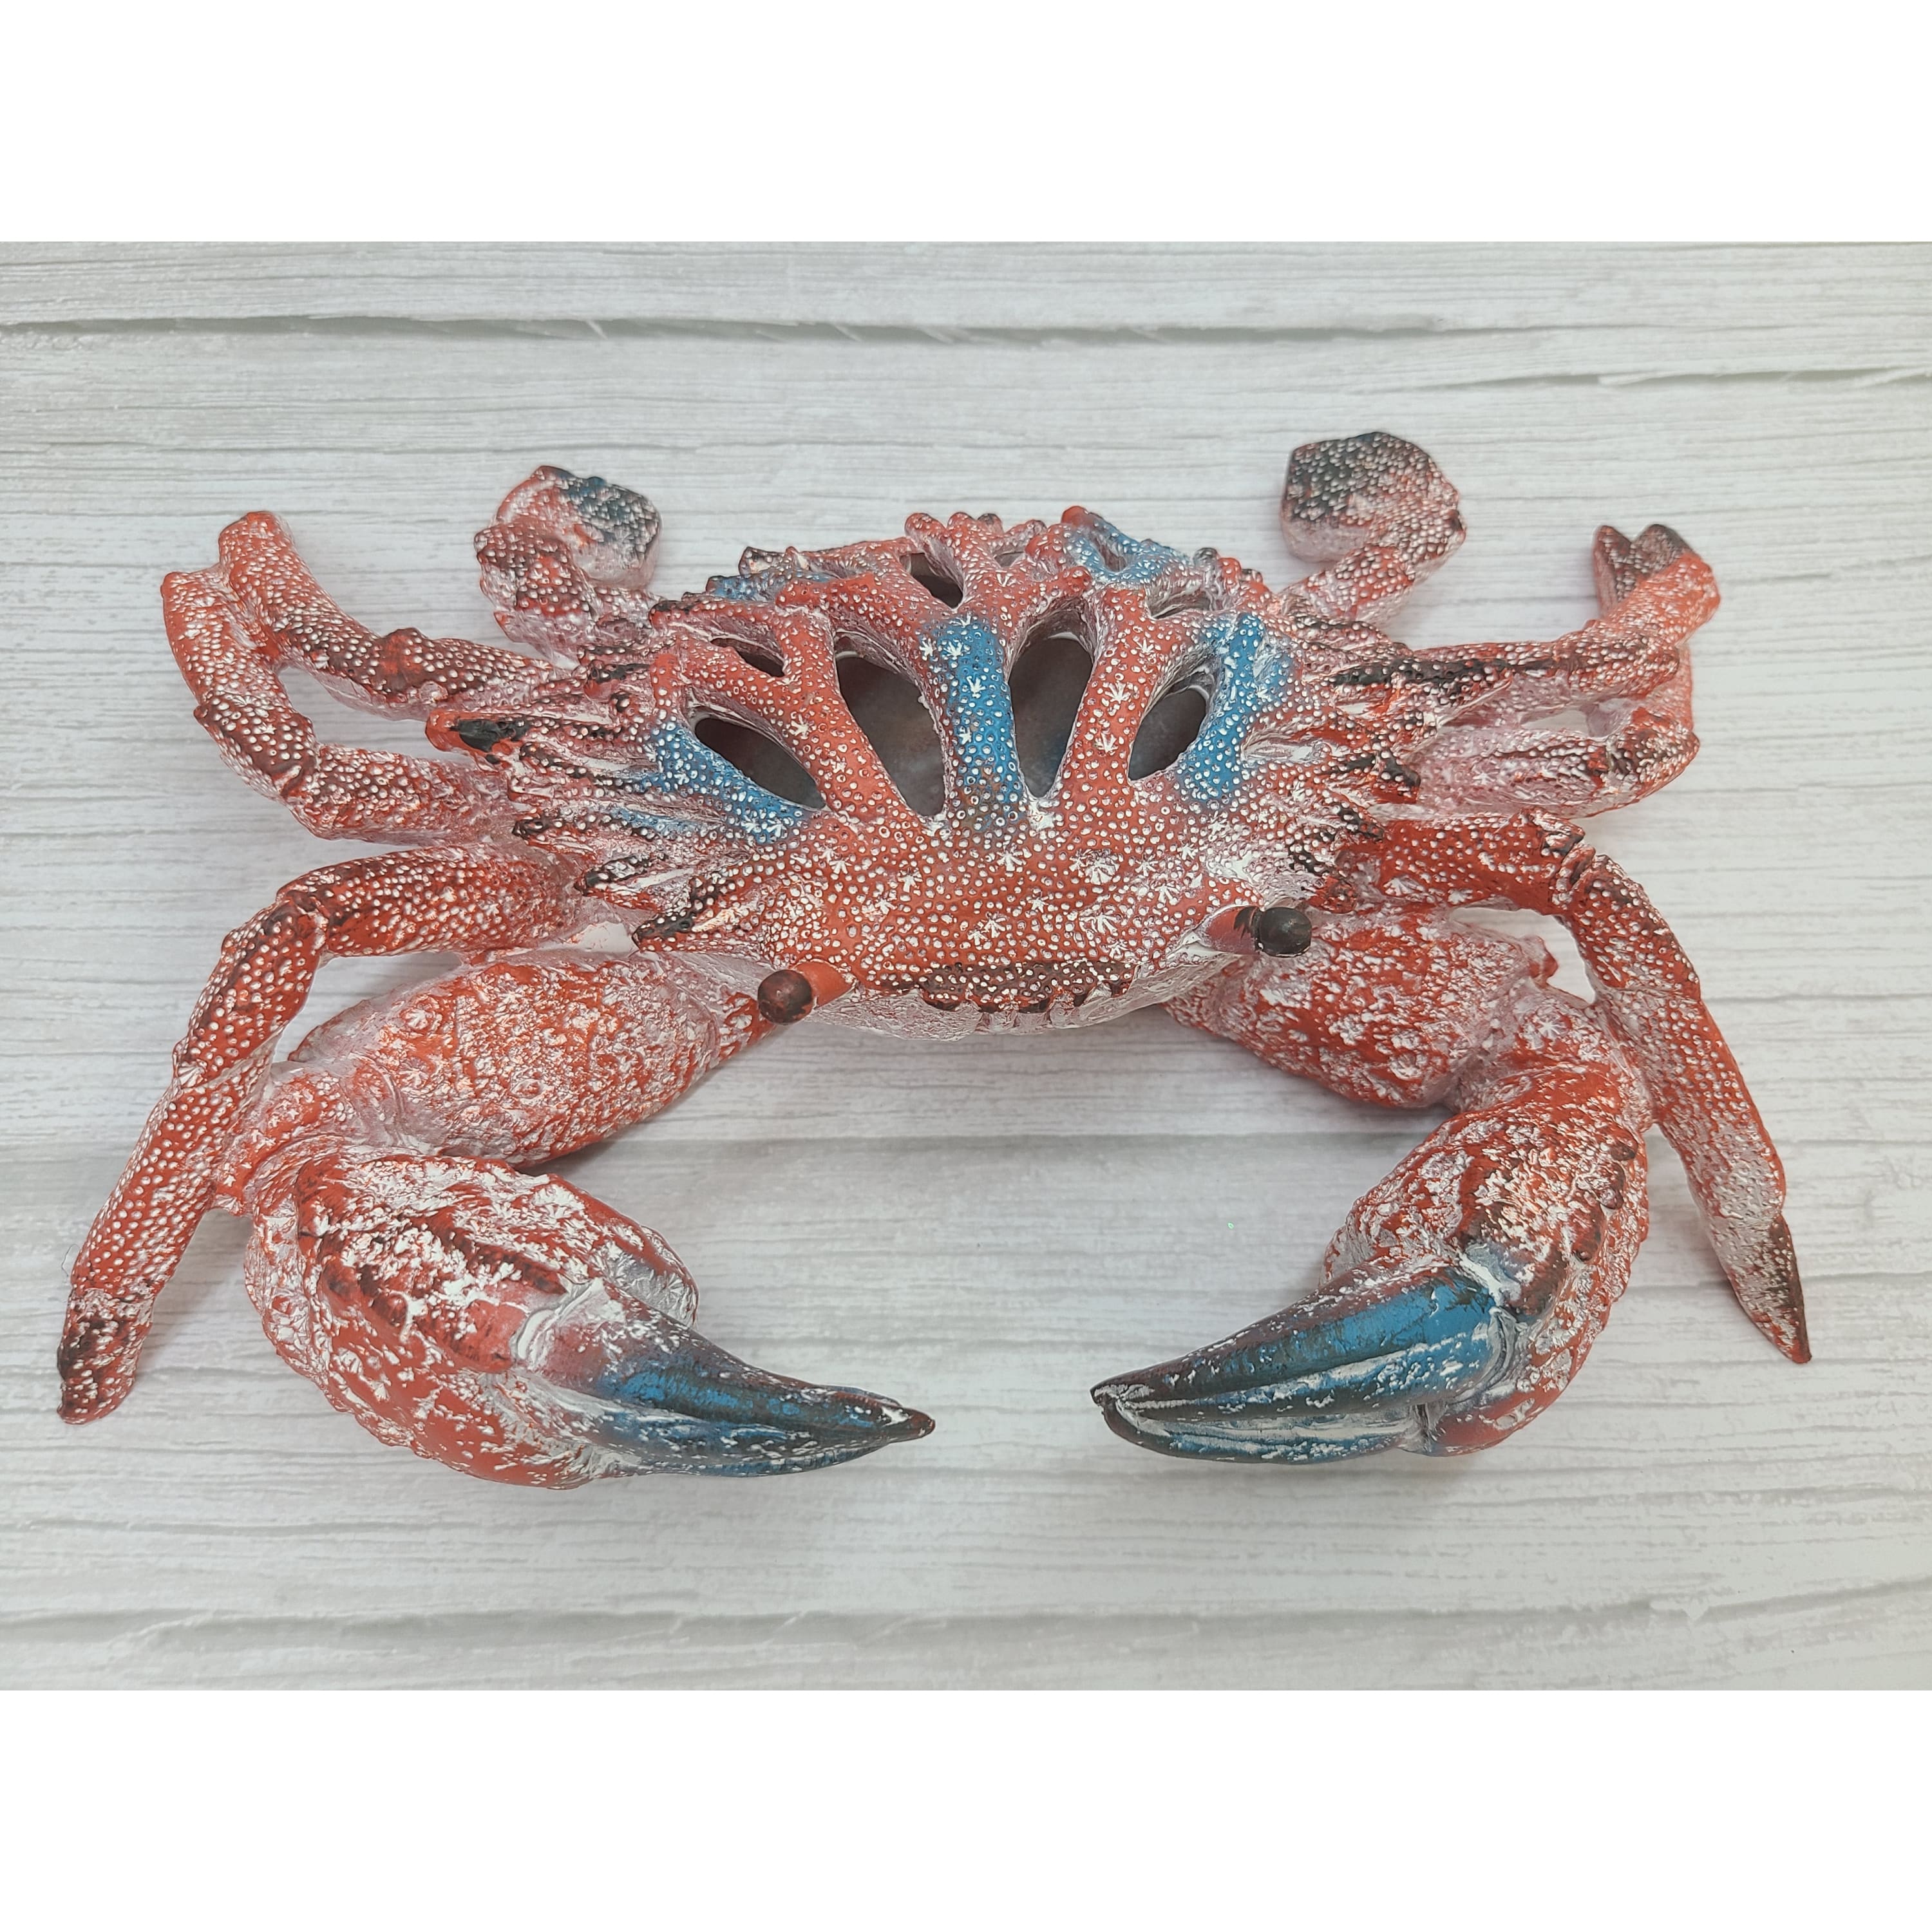 Crab Figurine, Coral Crab Decor, Ocean Decor, Crab Decoration, Crab Lover,  Red Coral Look Crab